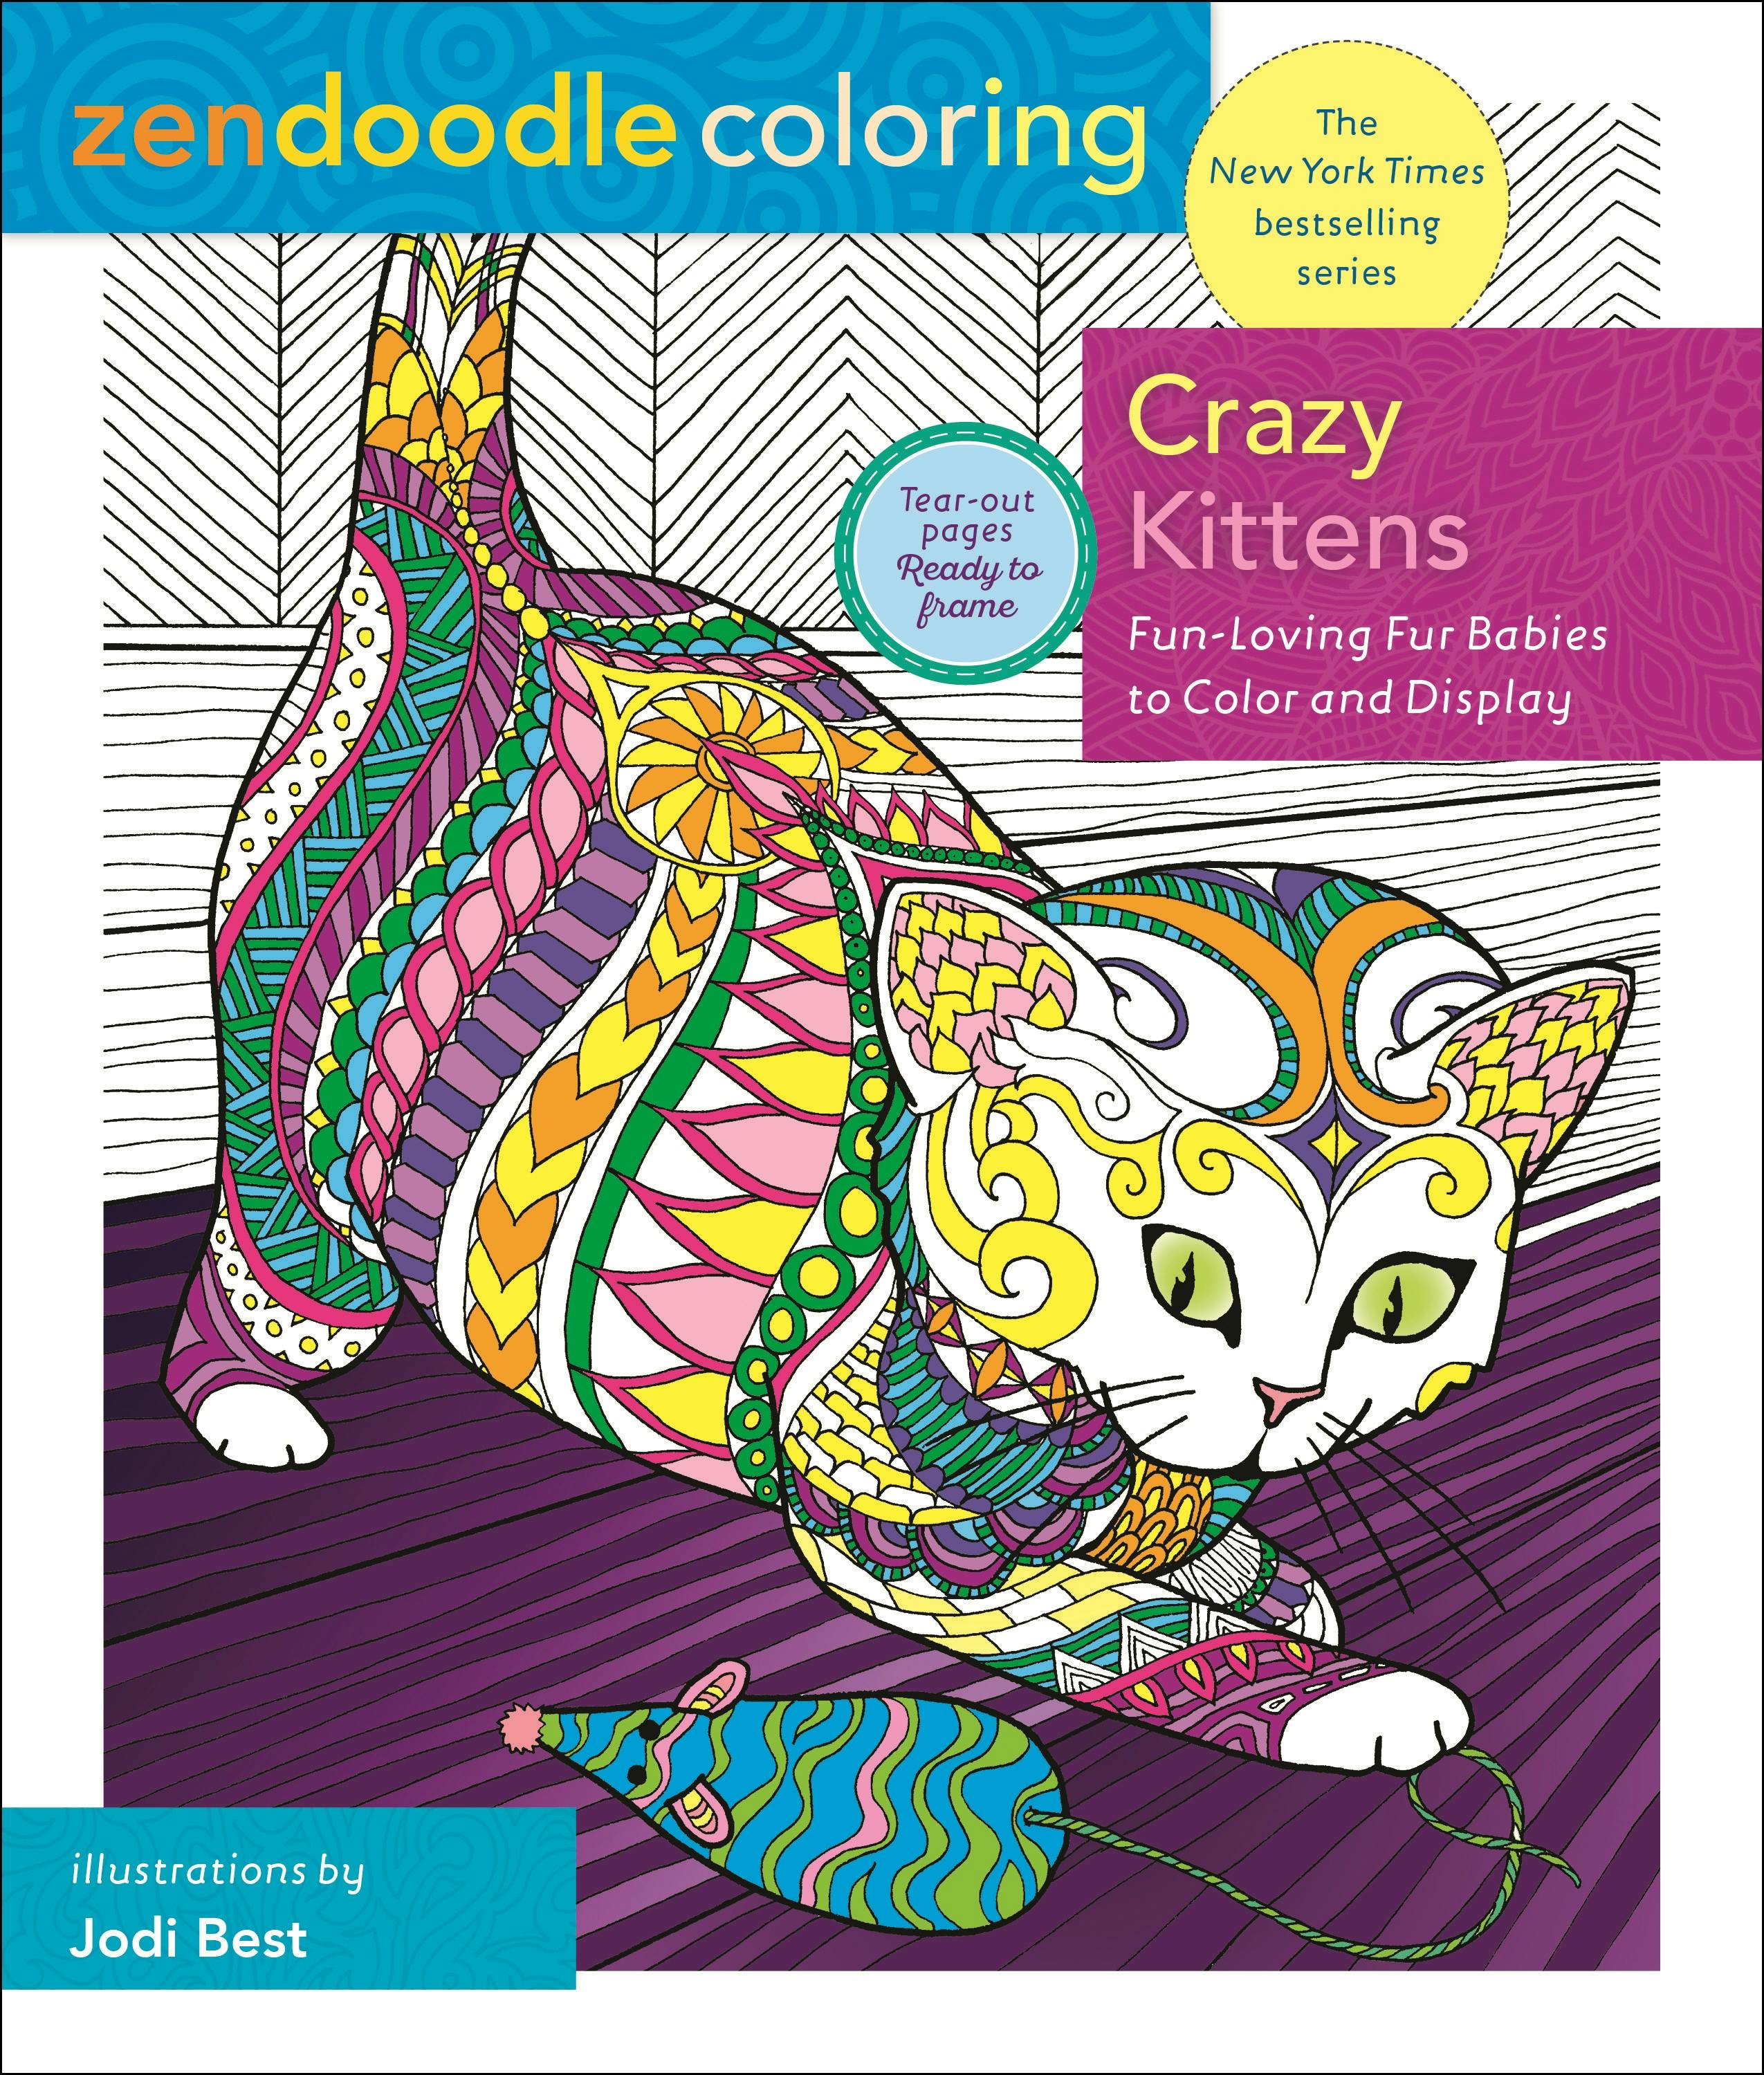 Zendoodle Coloring: Crazy Kittens